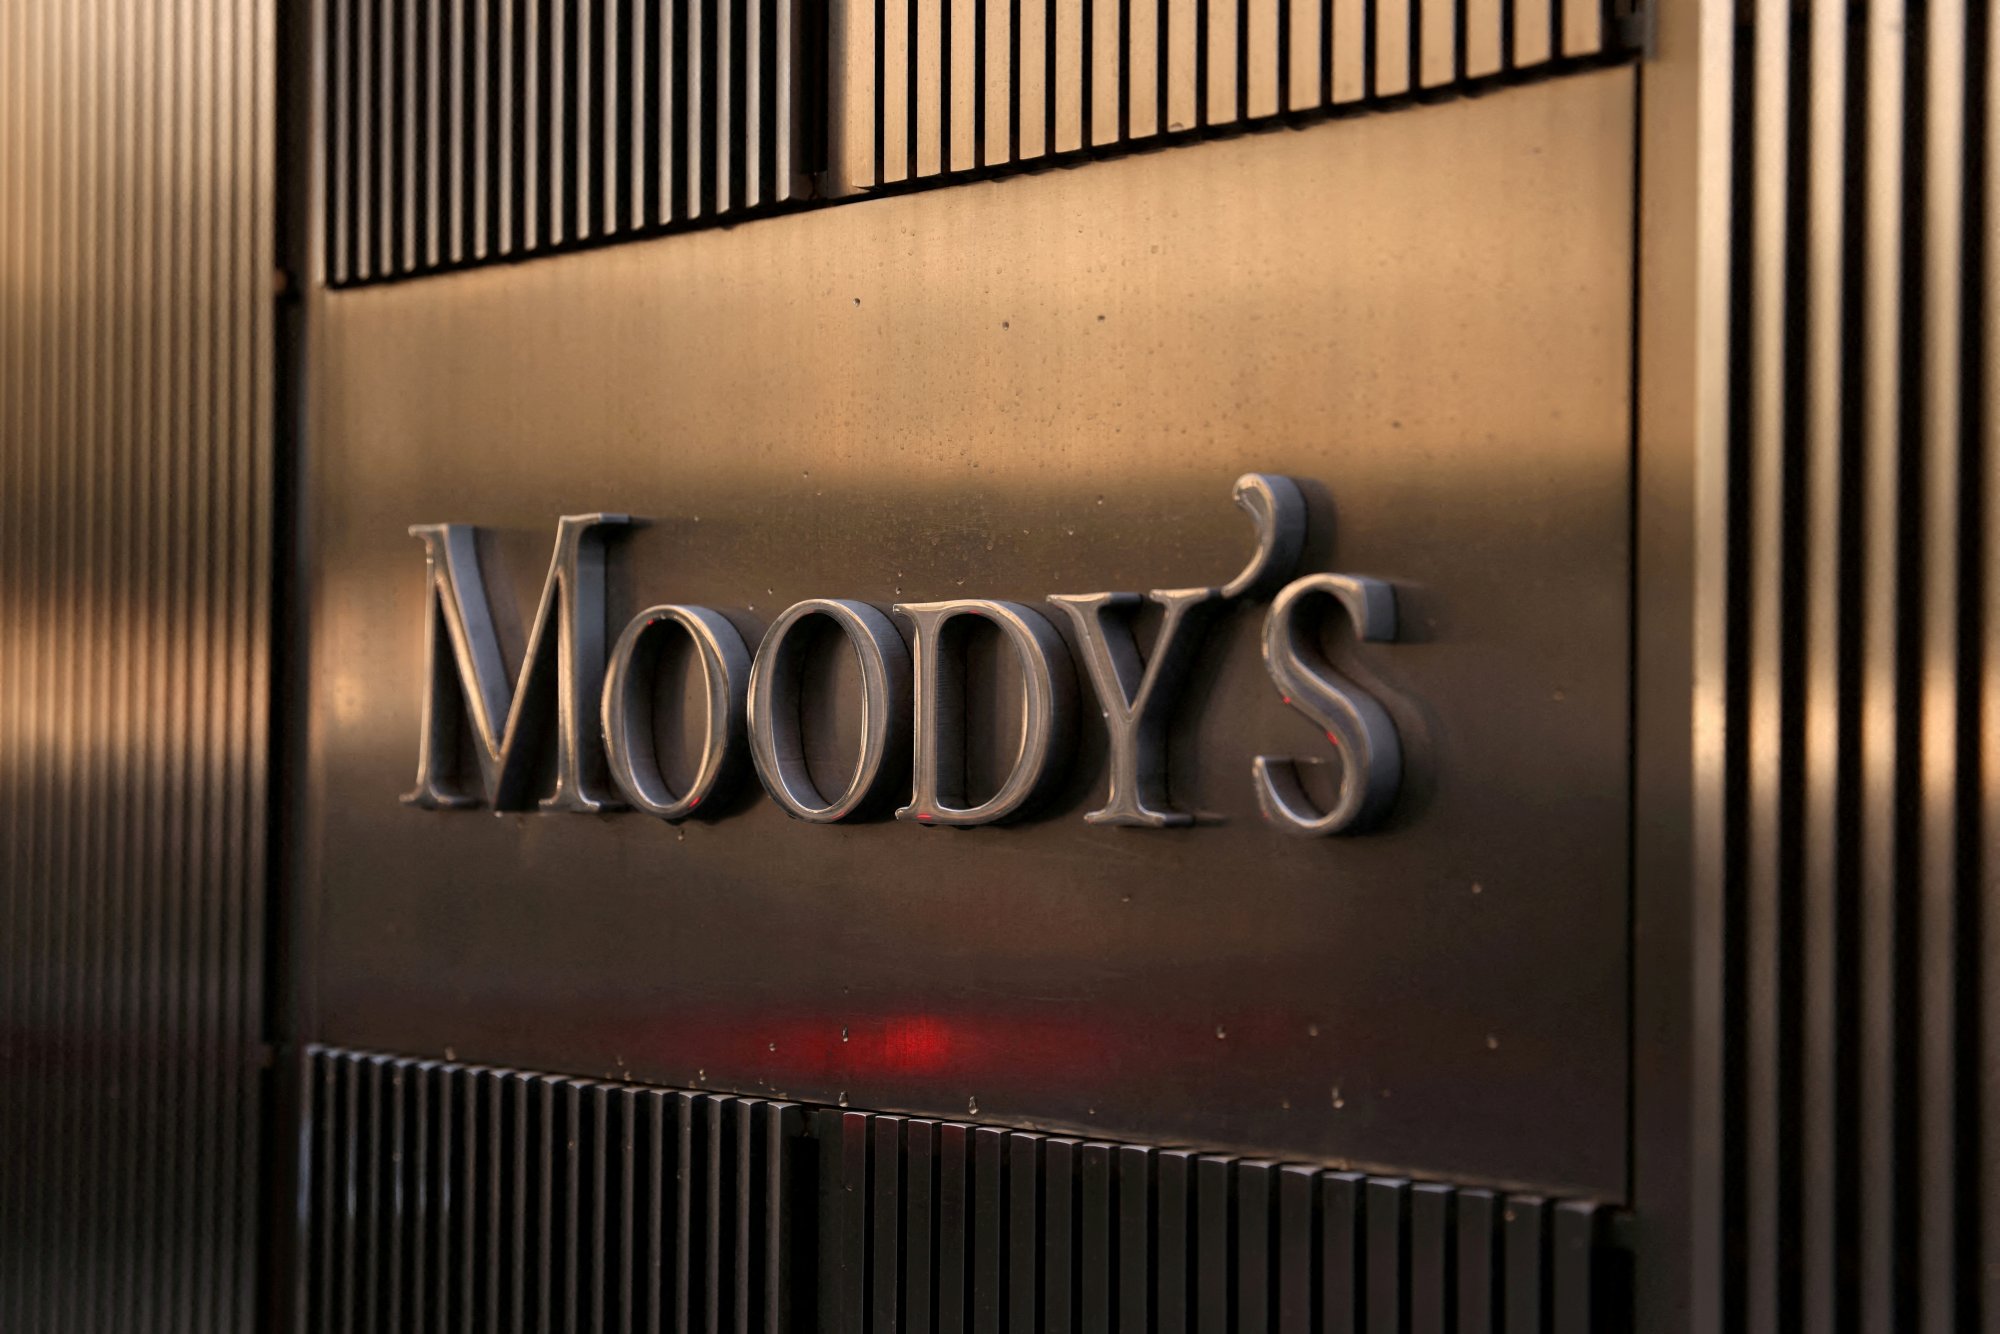 Nέο πλήγμα για την υπερχρεωμένη αμερικανική οικονομία: H Moody’s υποβάθμισε τις ΗΠΑ όπως είχε κανει και η Fitch!